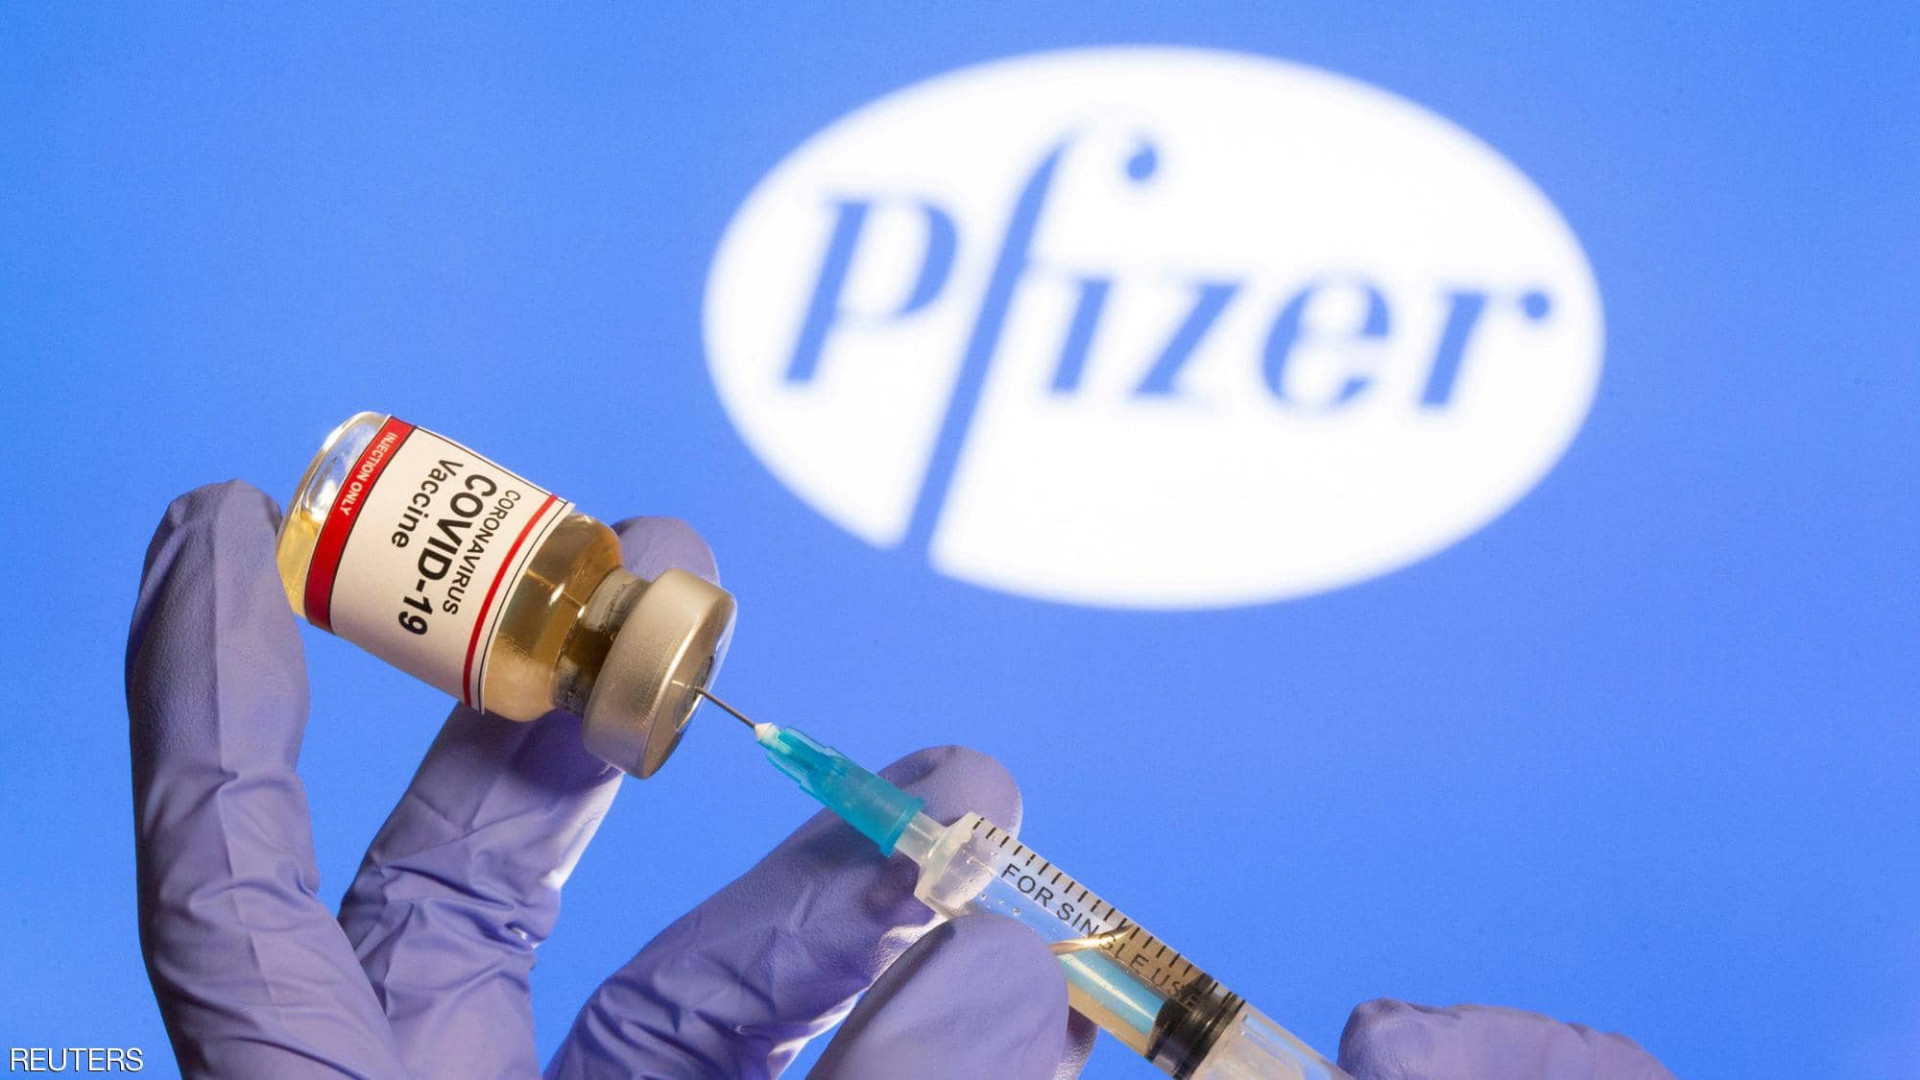 Pfizer’s COVID-19 vaccine 95% effective in final results